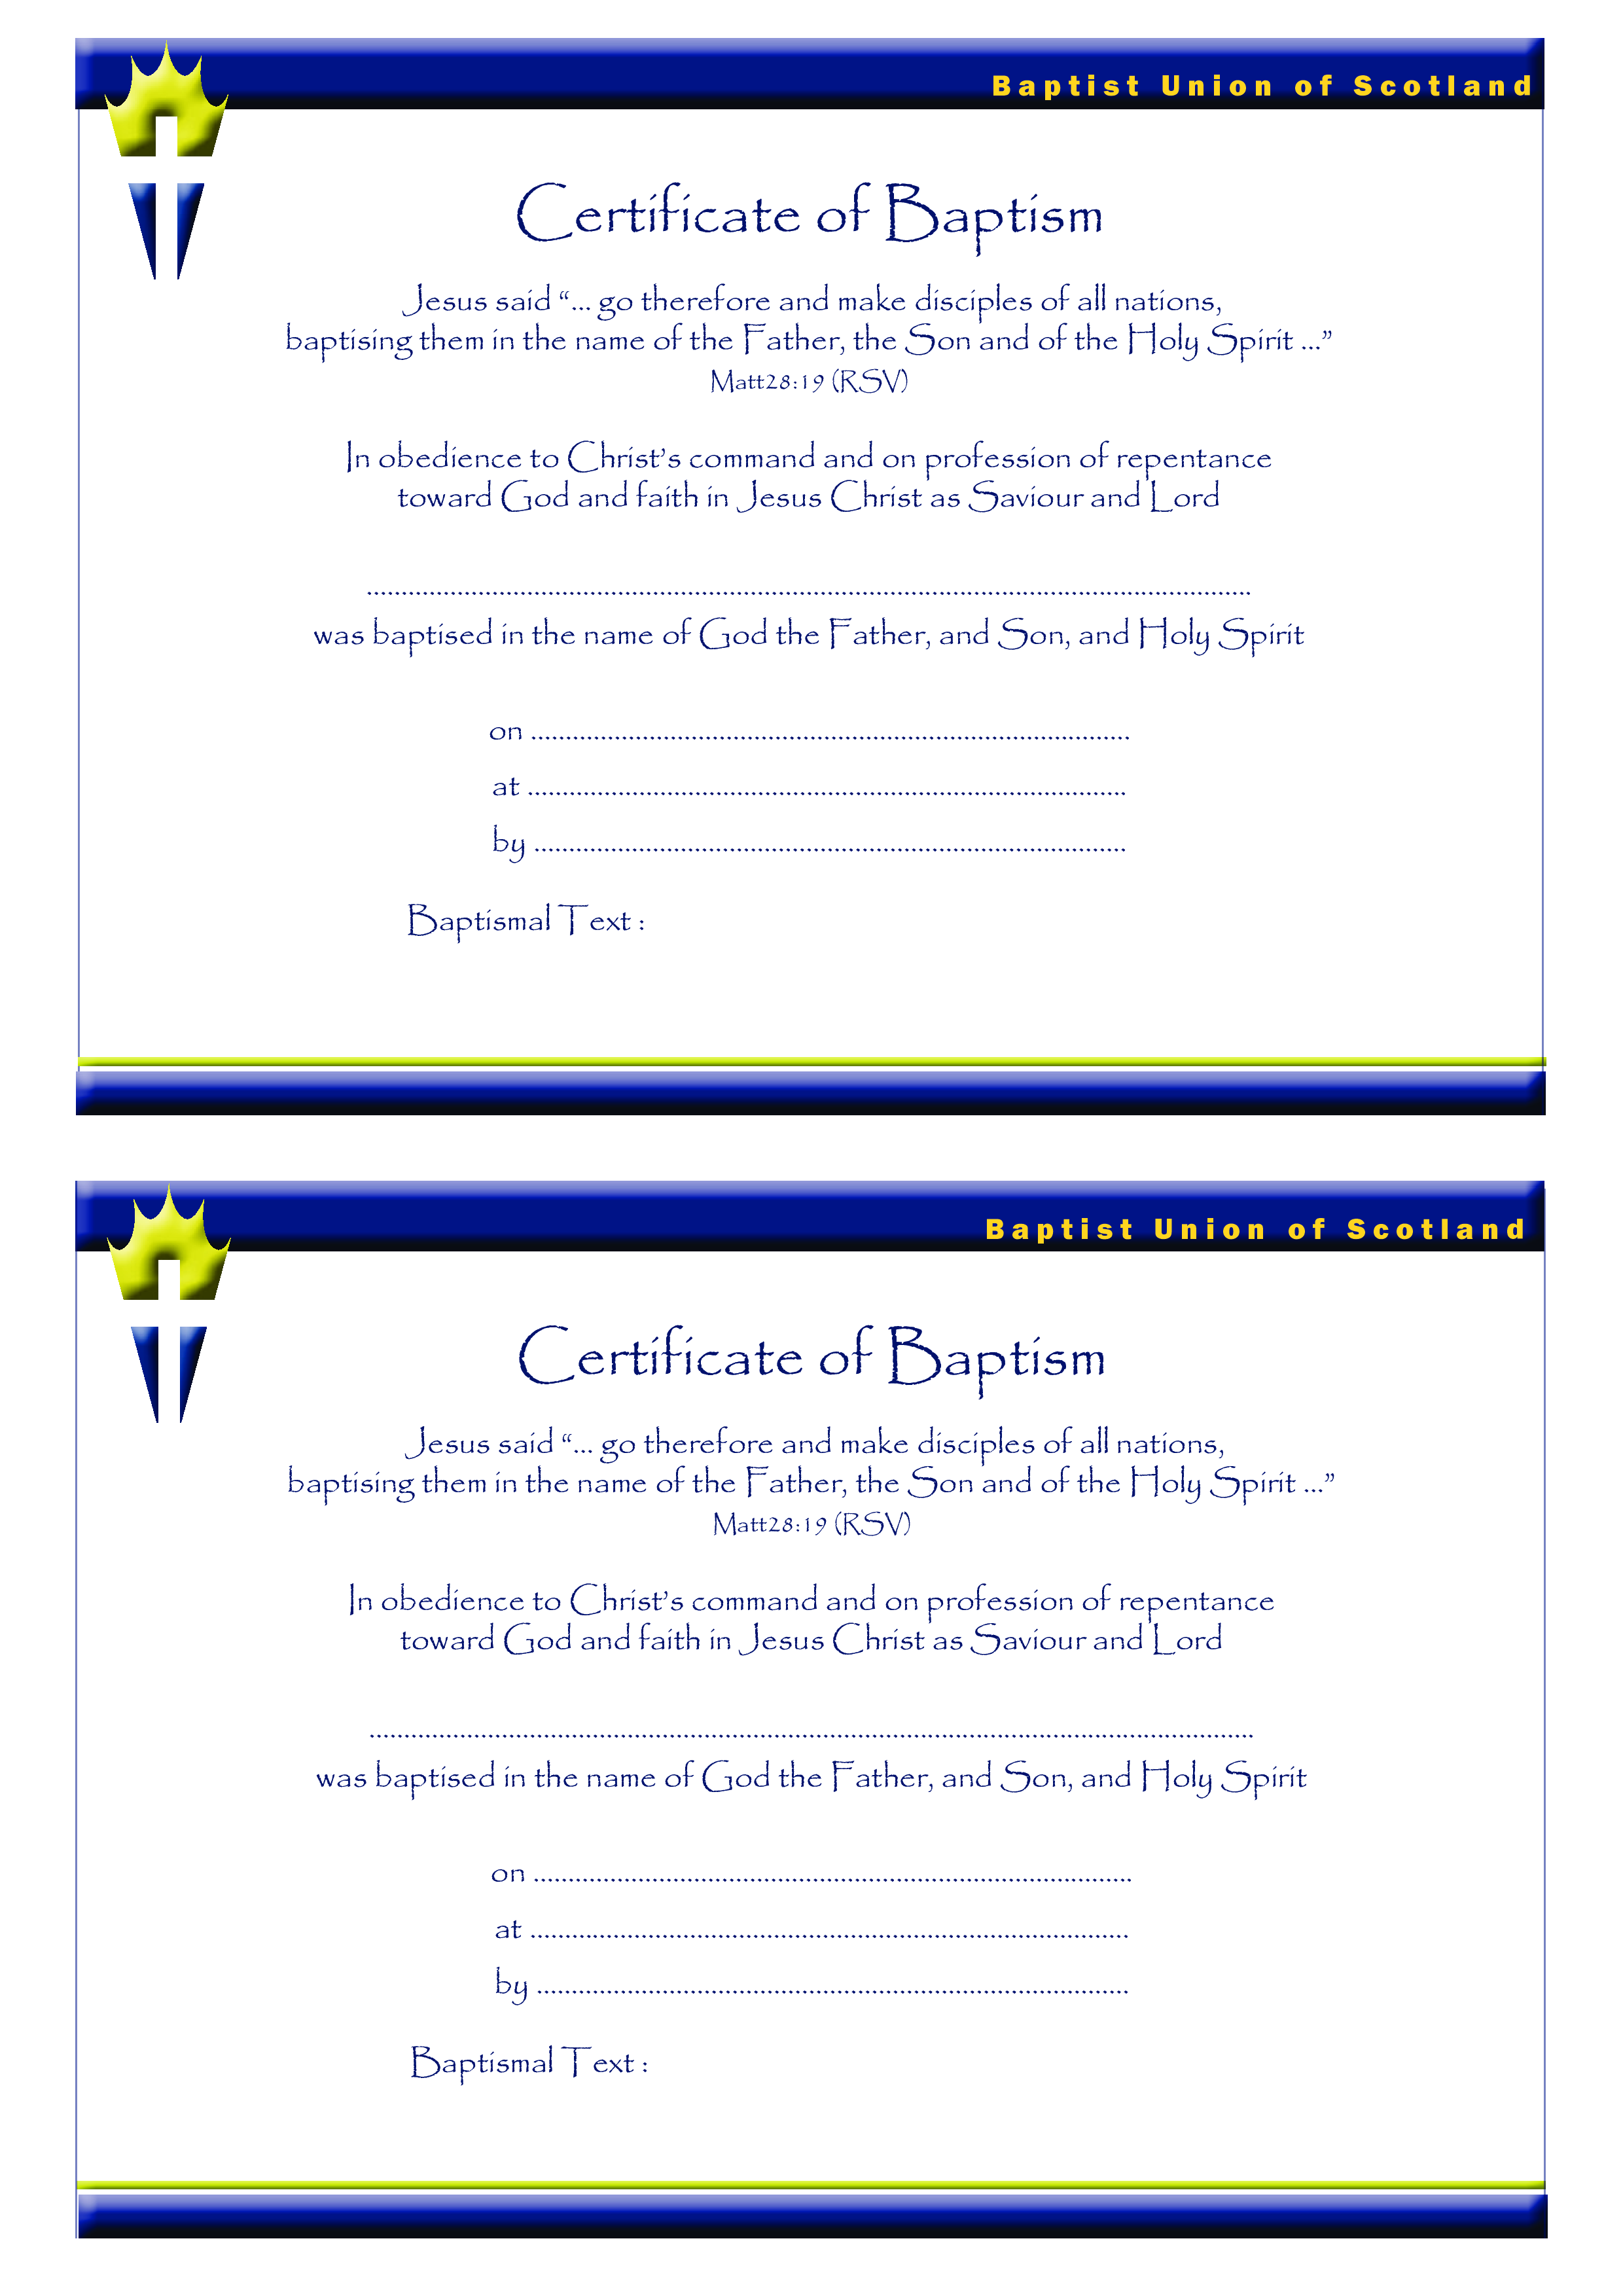 Certificate of Baptism Catholic 模板